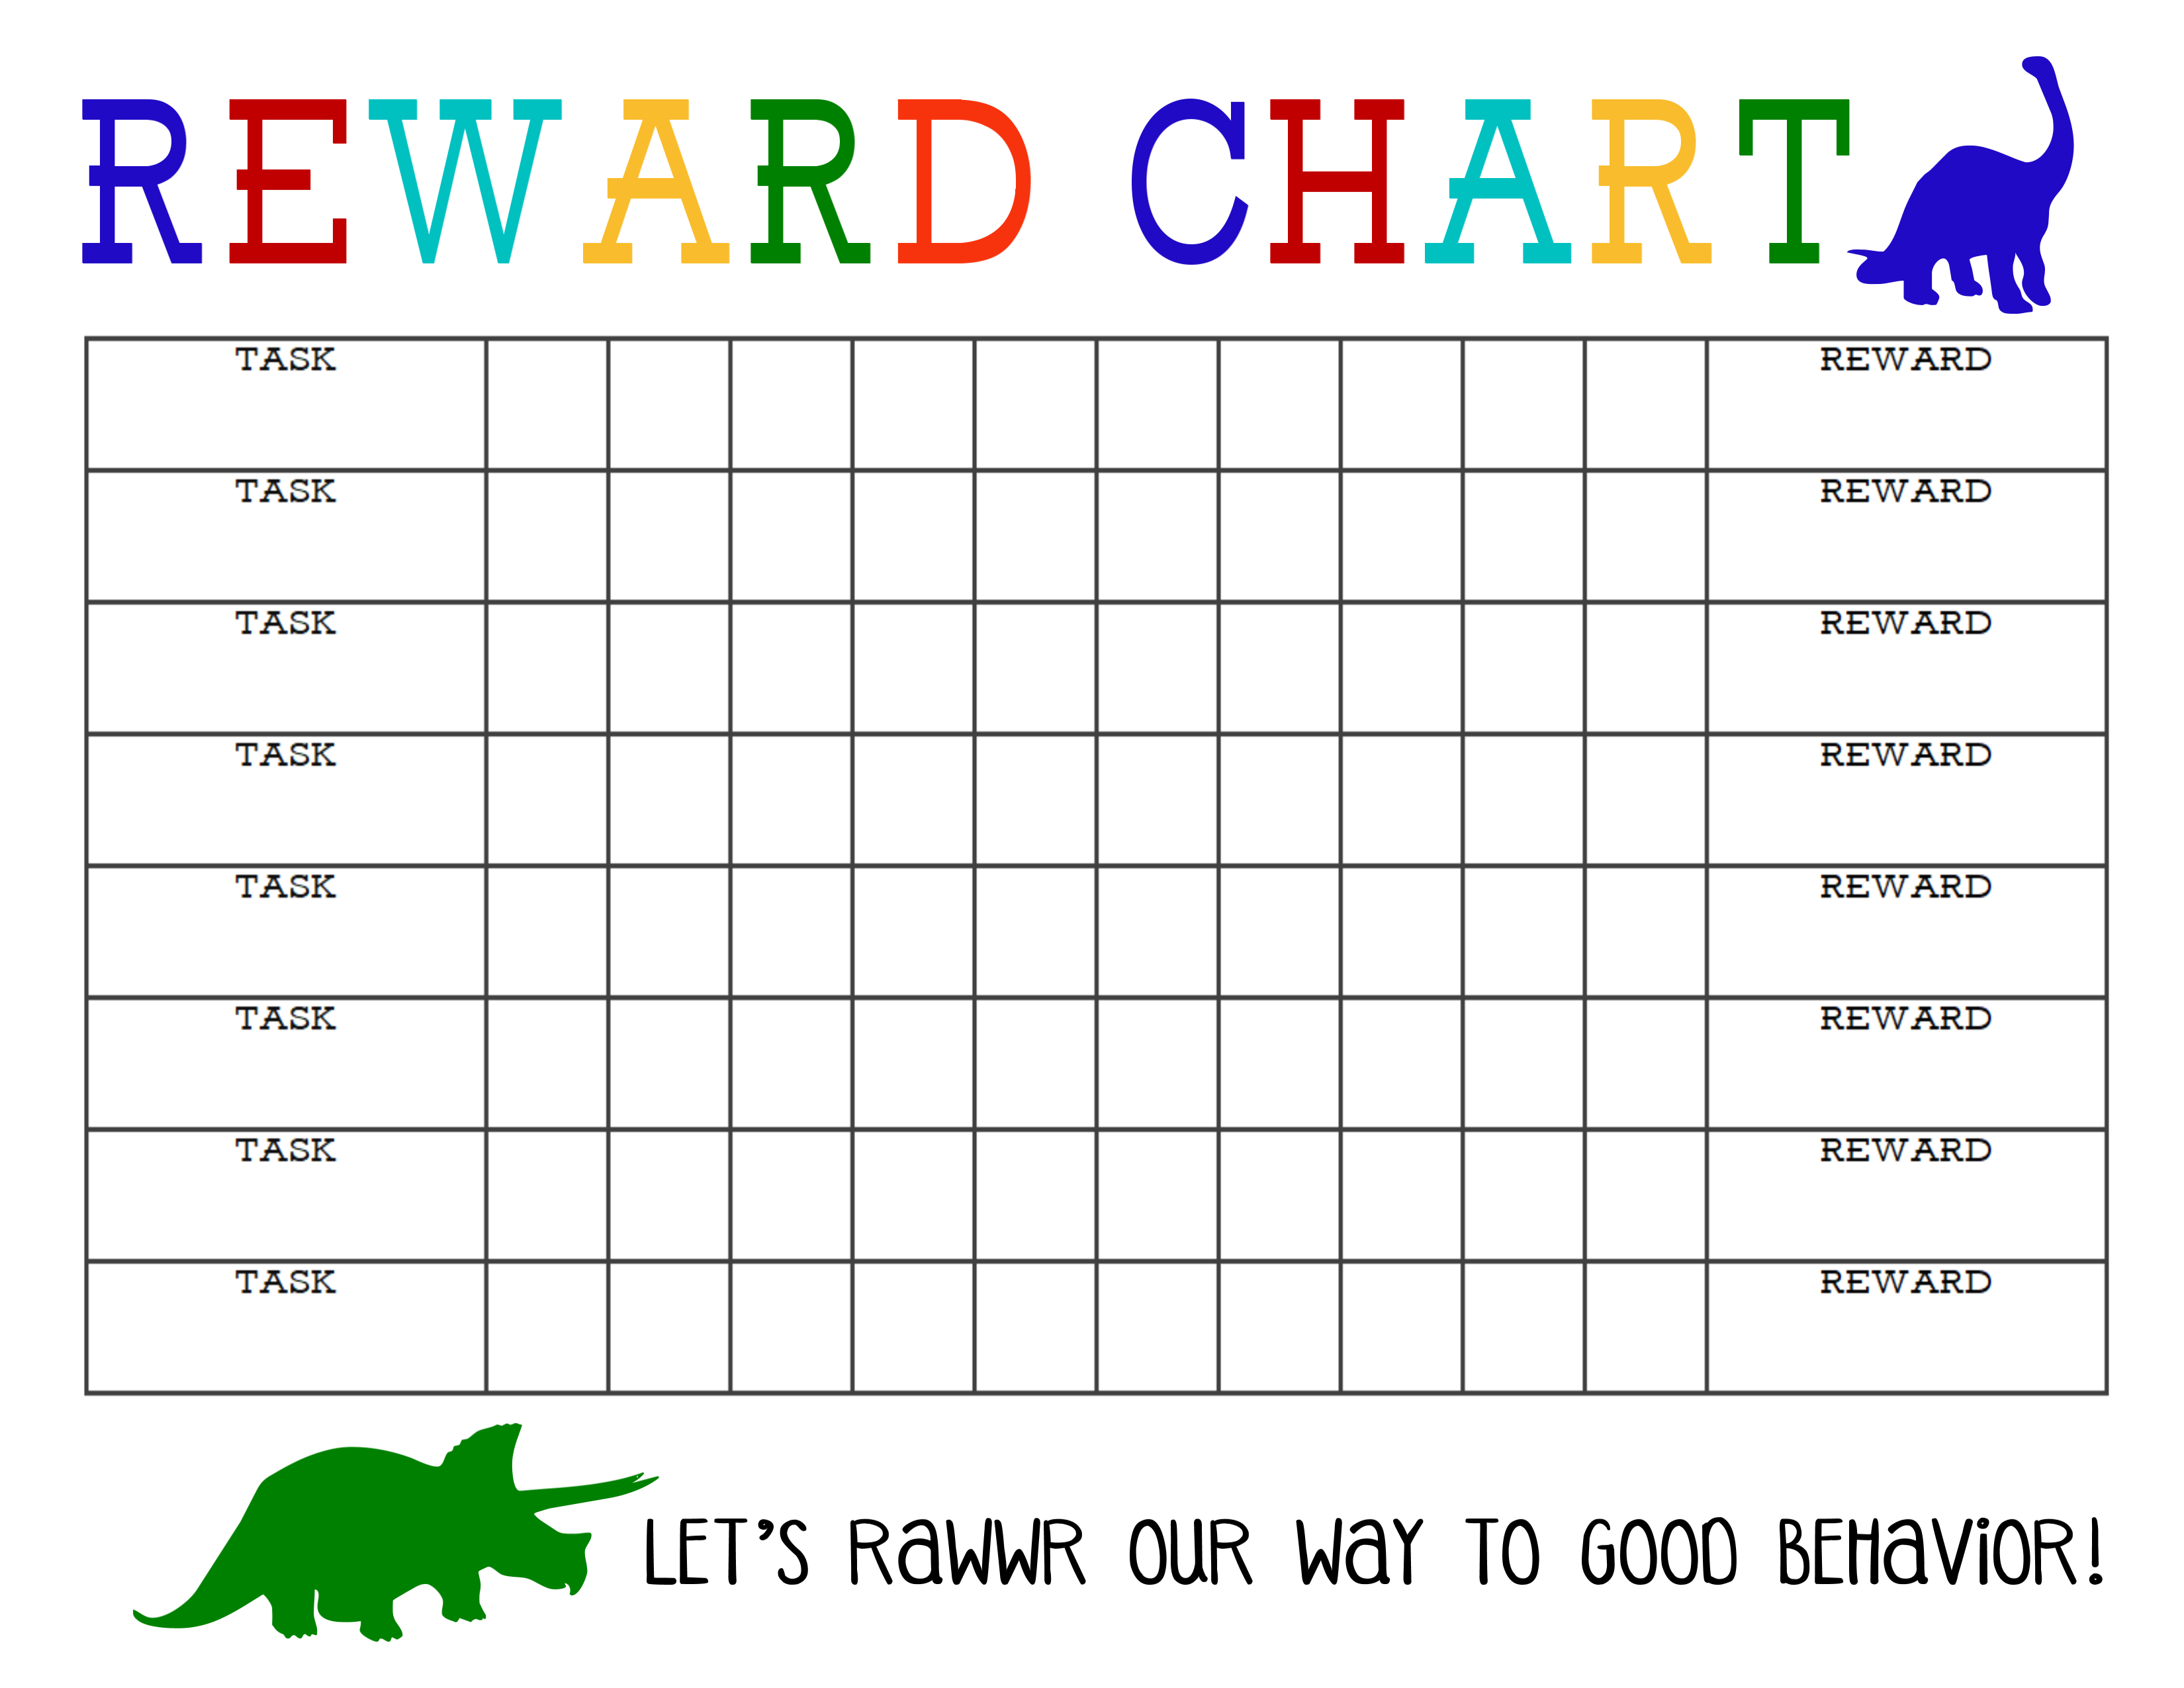 Printable Reward Chart - The Girl Creative - Free Printable Reward Charts For Teenagers